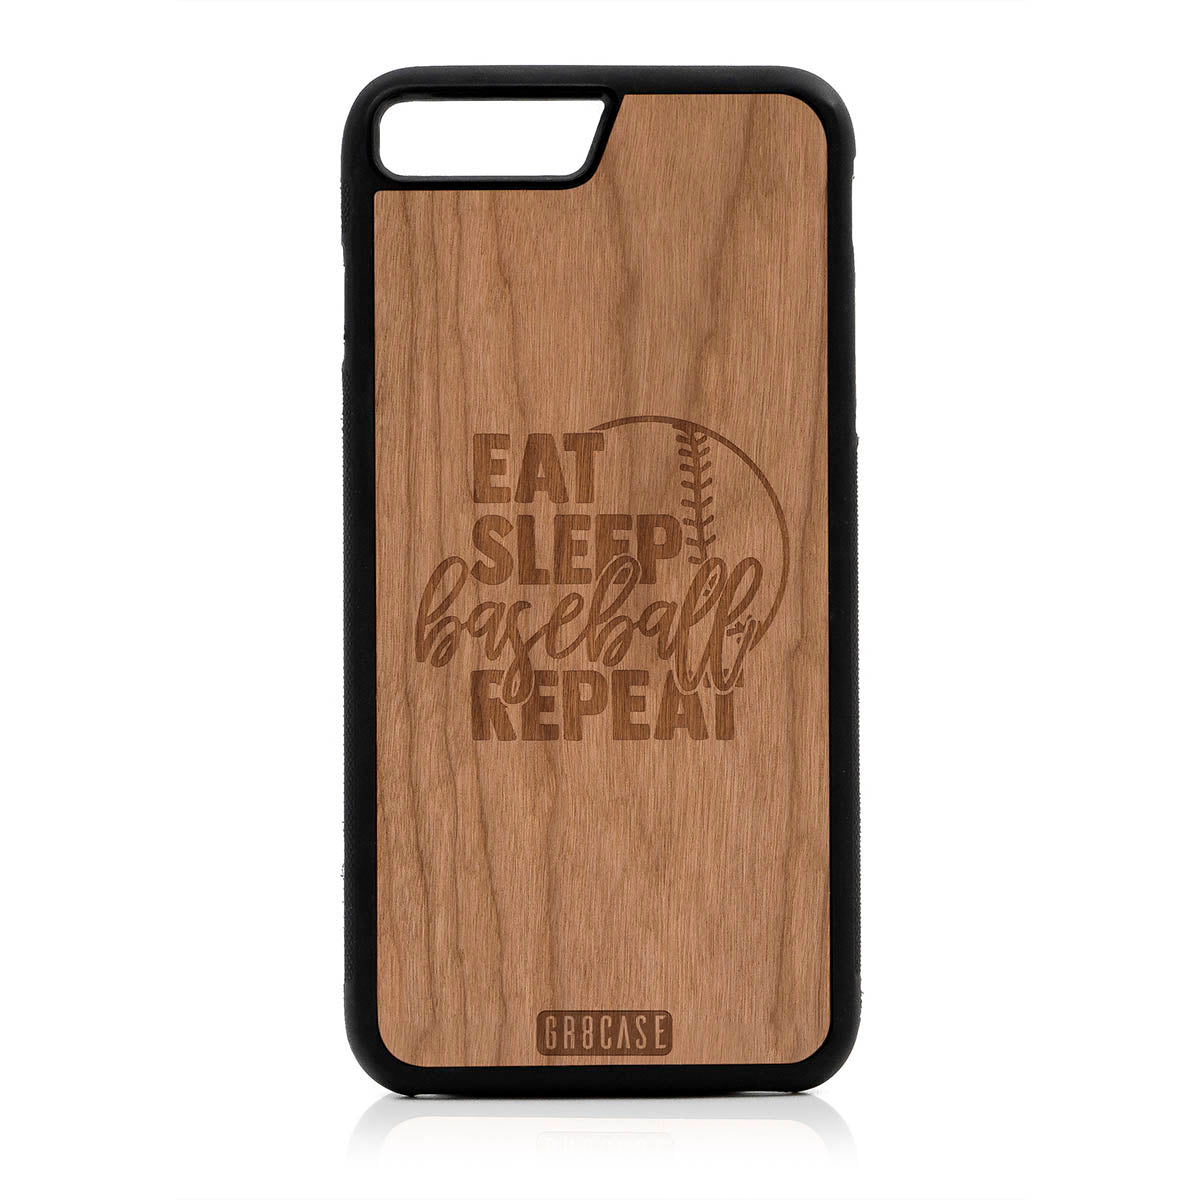 Eat Sleep Baseball Repeat Design Wood Case For iPhone 7 Plus / 8 Plus